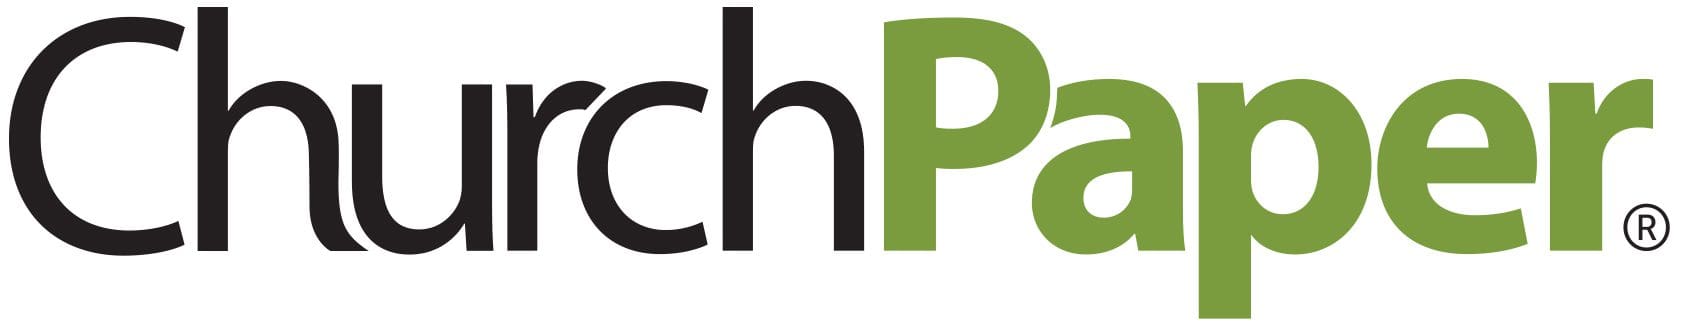 ChurchPaper Logo